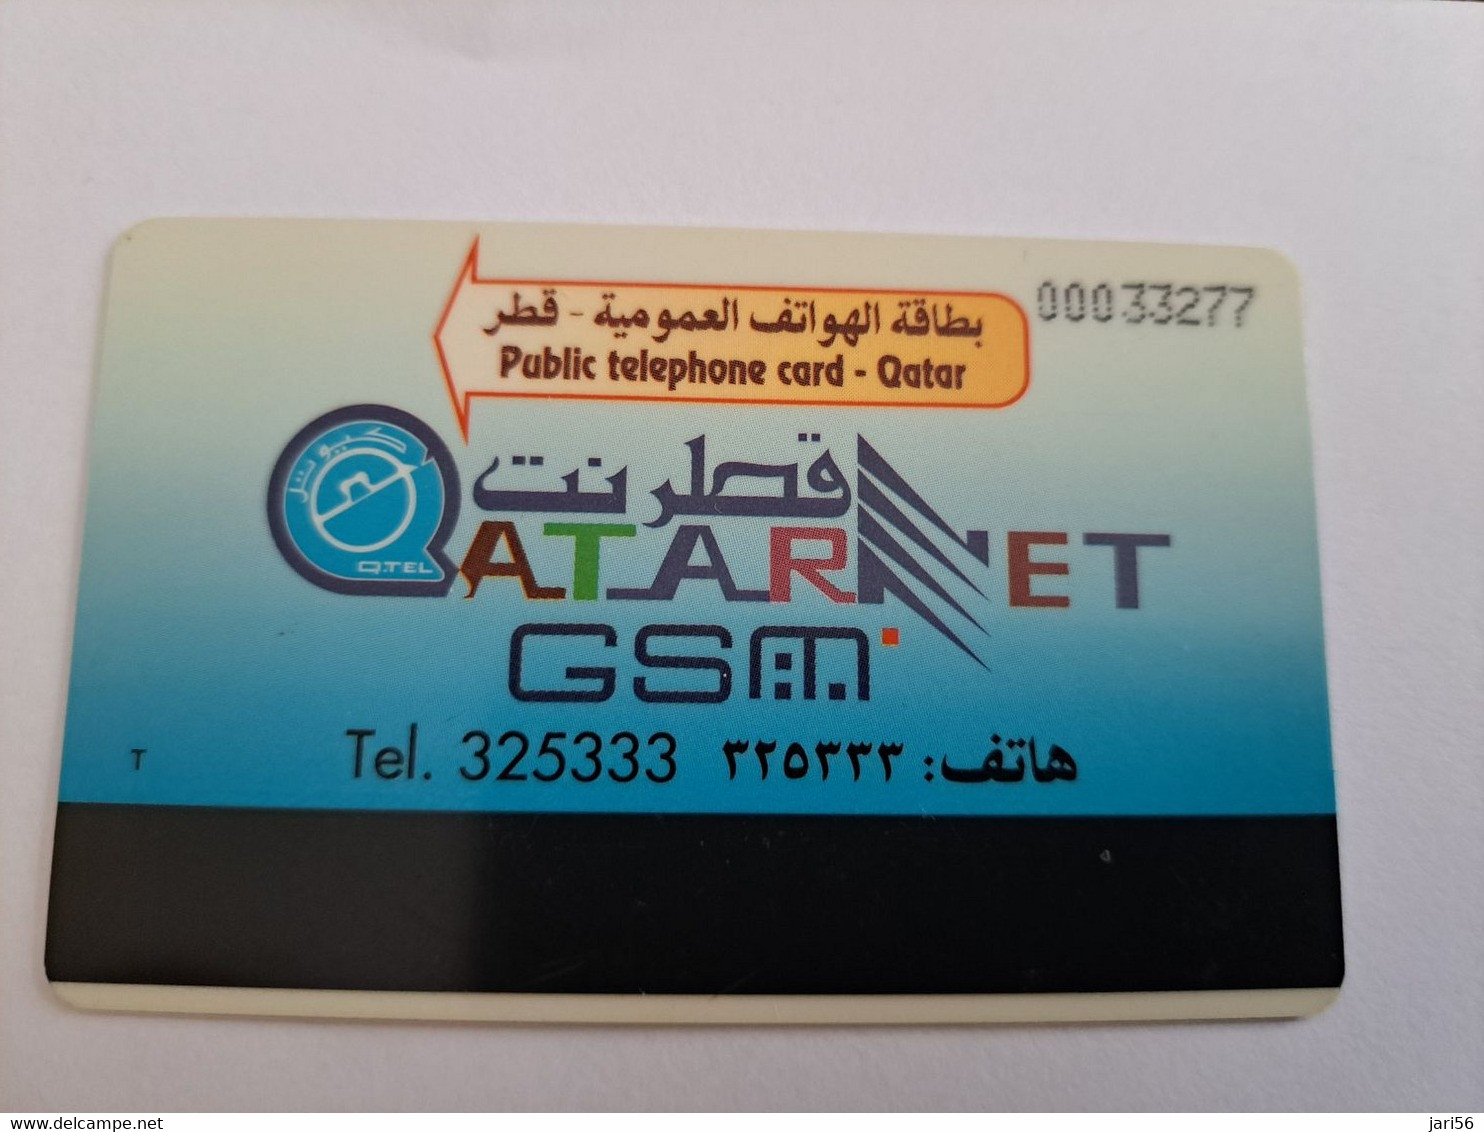 QATAR  PUBLIC TELECOM CORPORATION / PAY PHONE  MAGNETIC/ AUTELCA   Q 50   QTR 41  QUATAR OPEN 96 CHAMPION     **10844** - Qatar